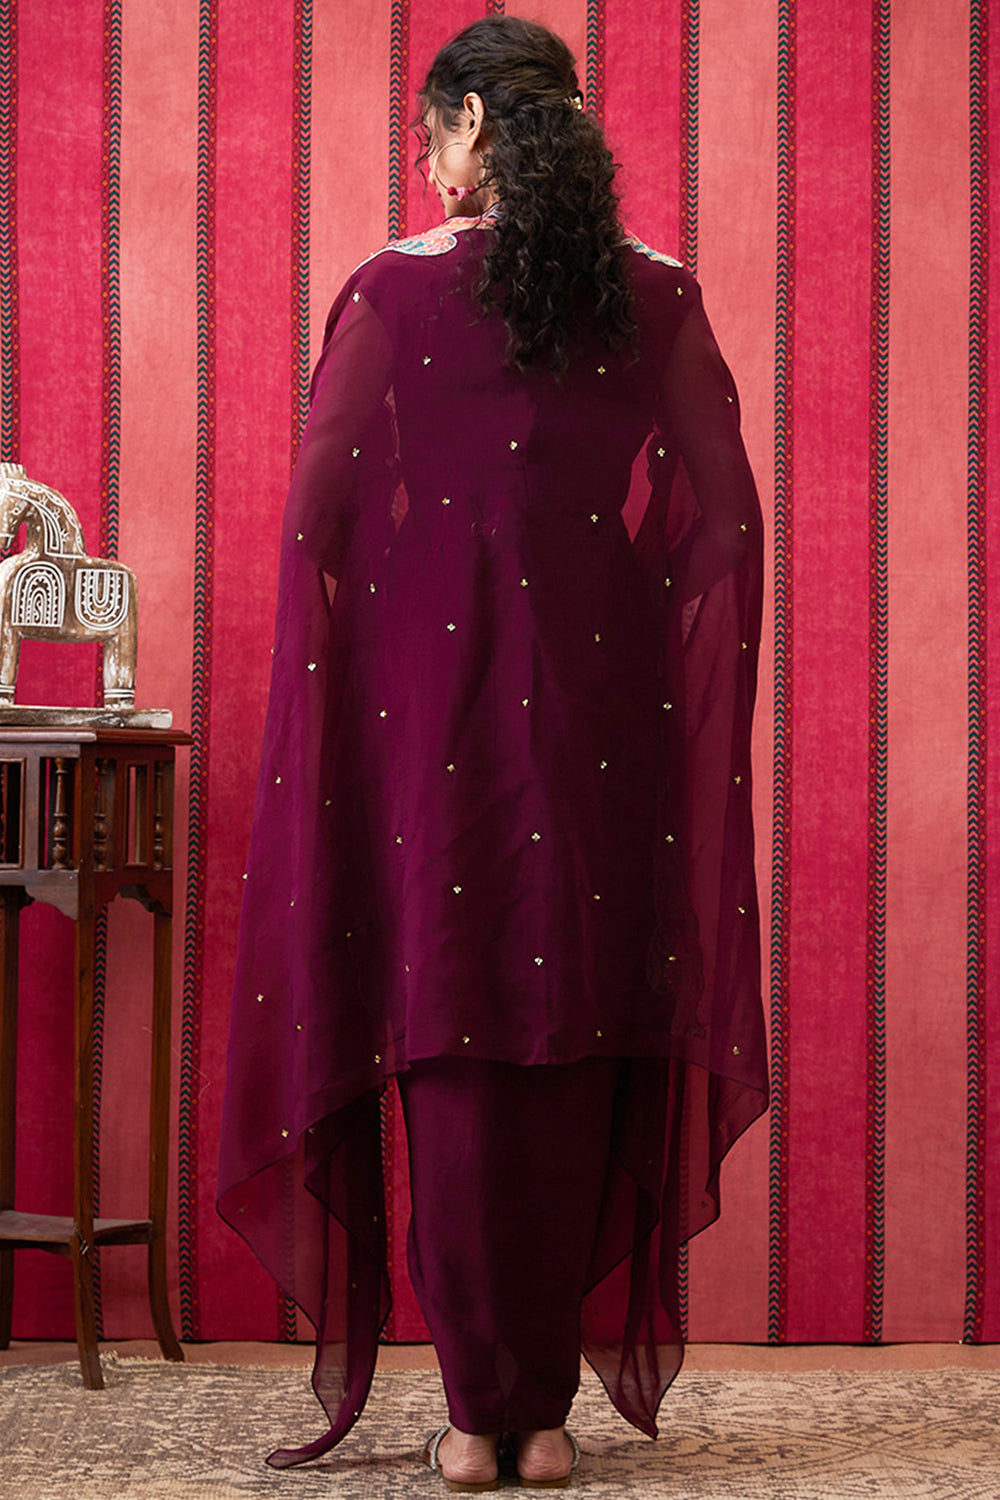 Qala Drape Dress With Printed Applique Cape